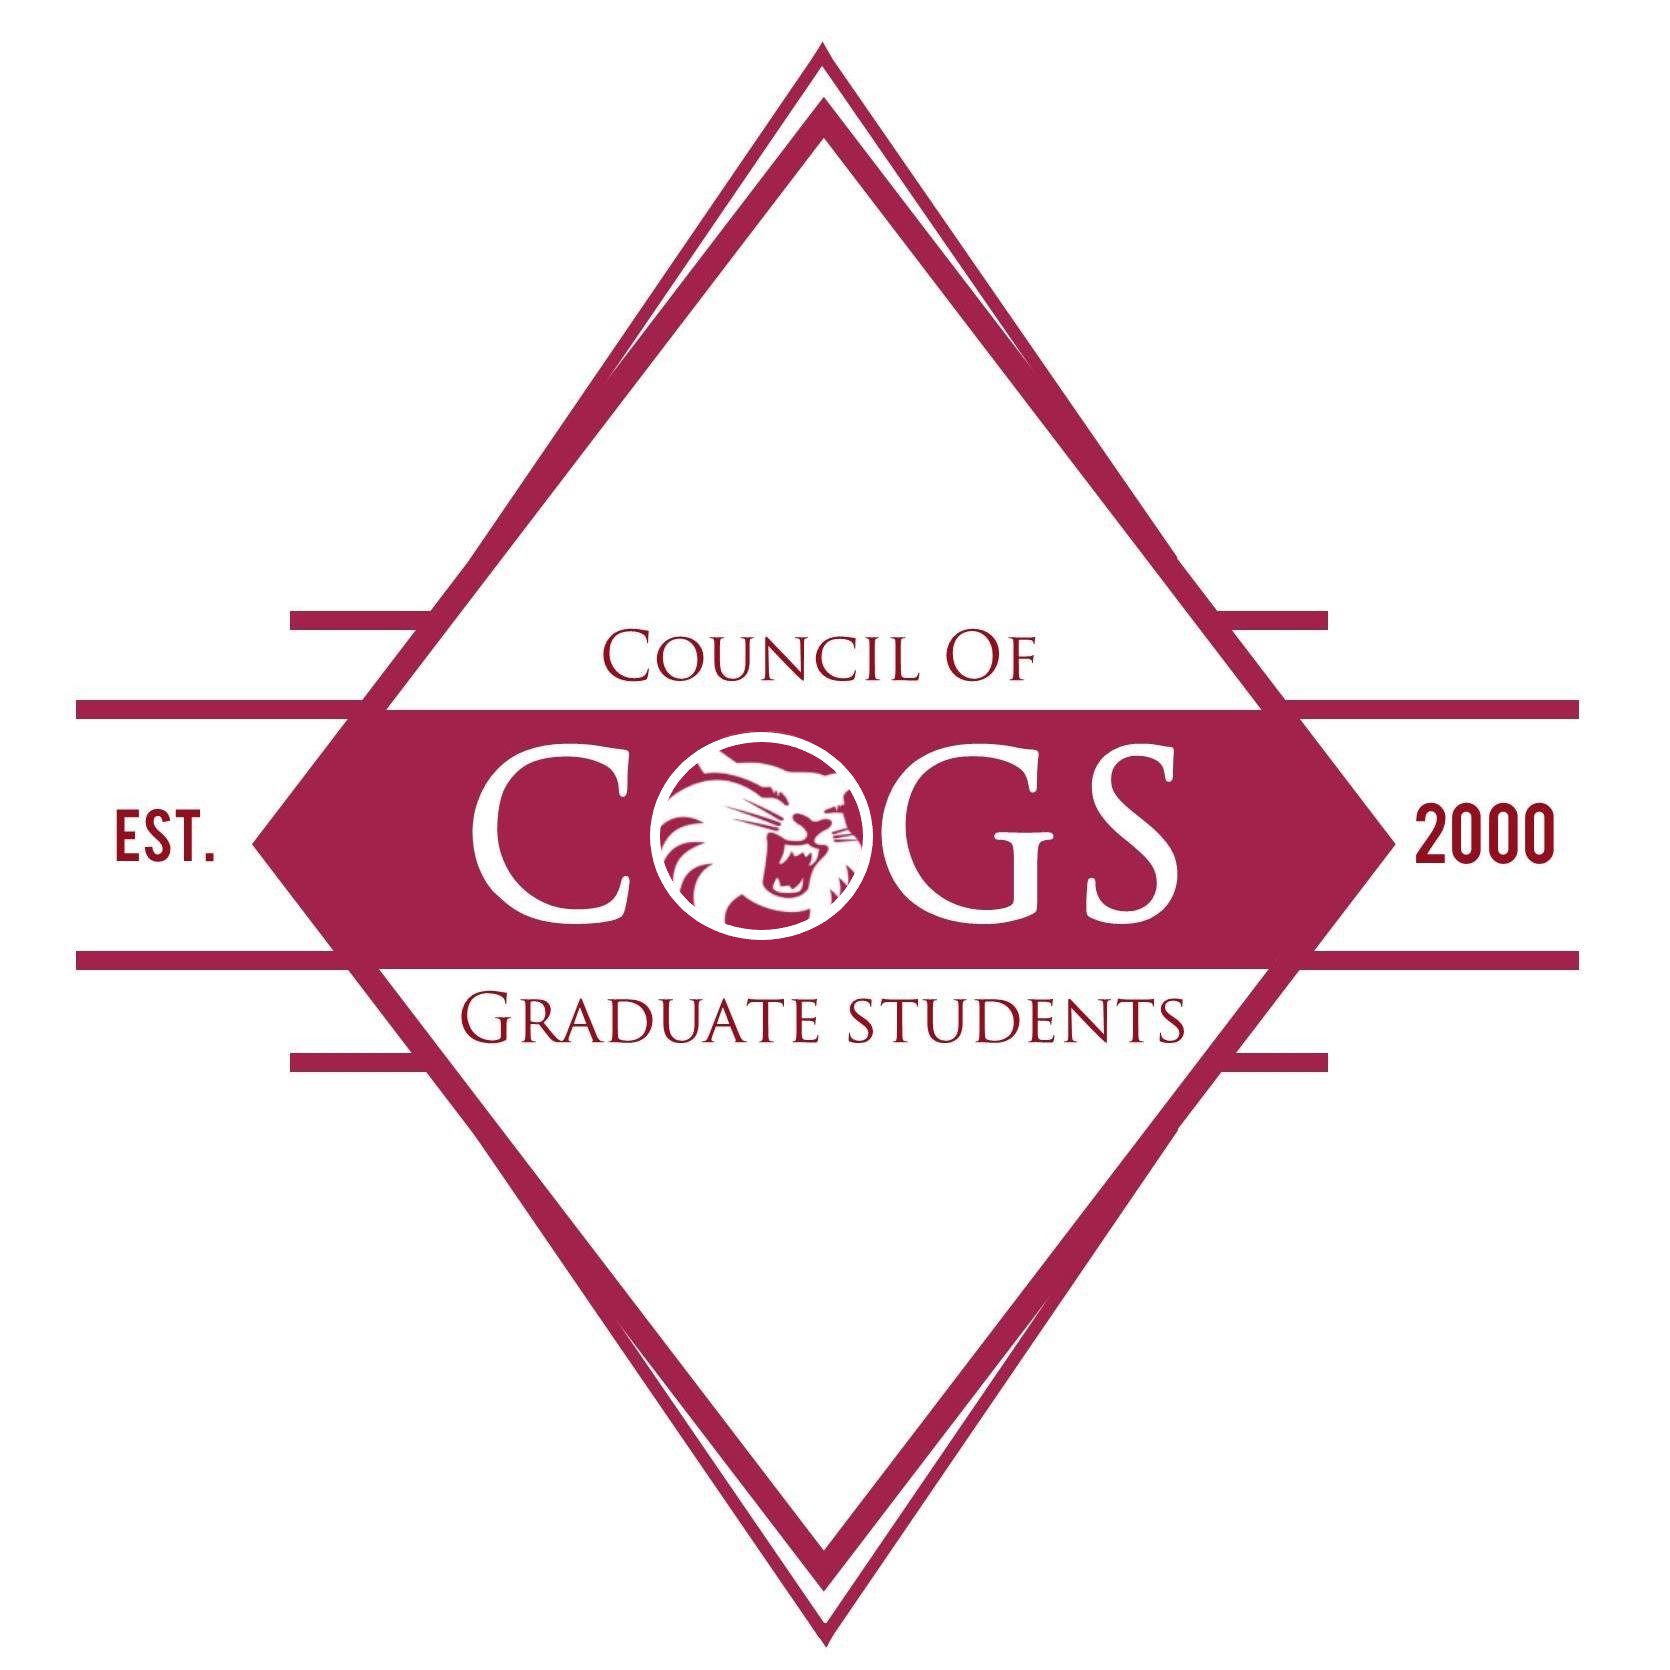 COGS logo